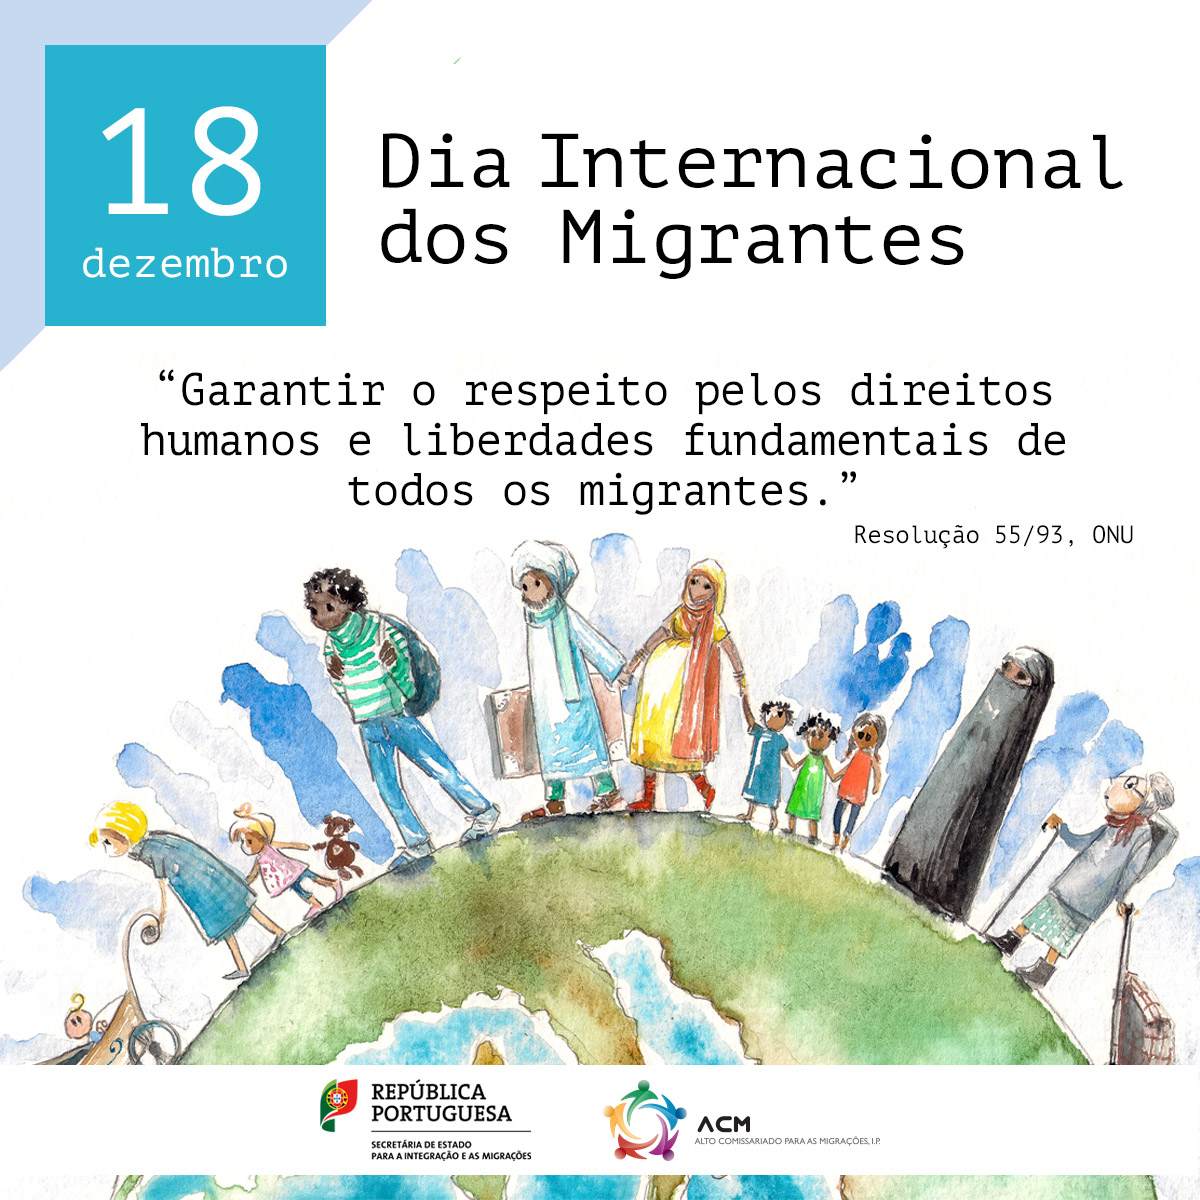 dia internacional dos migrantes